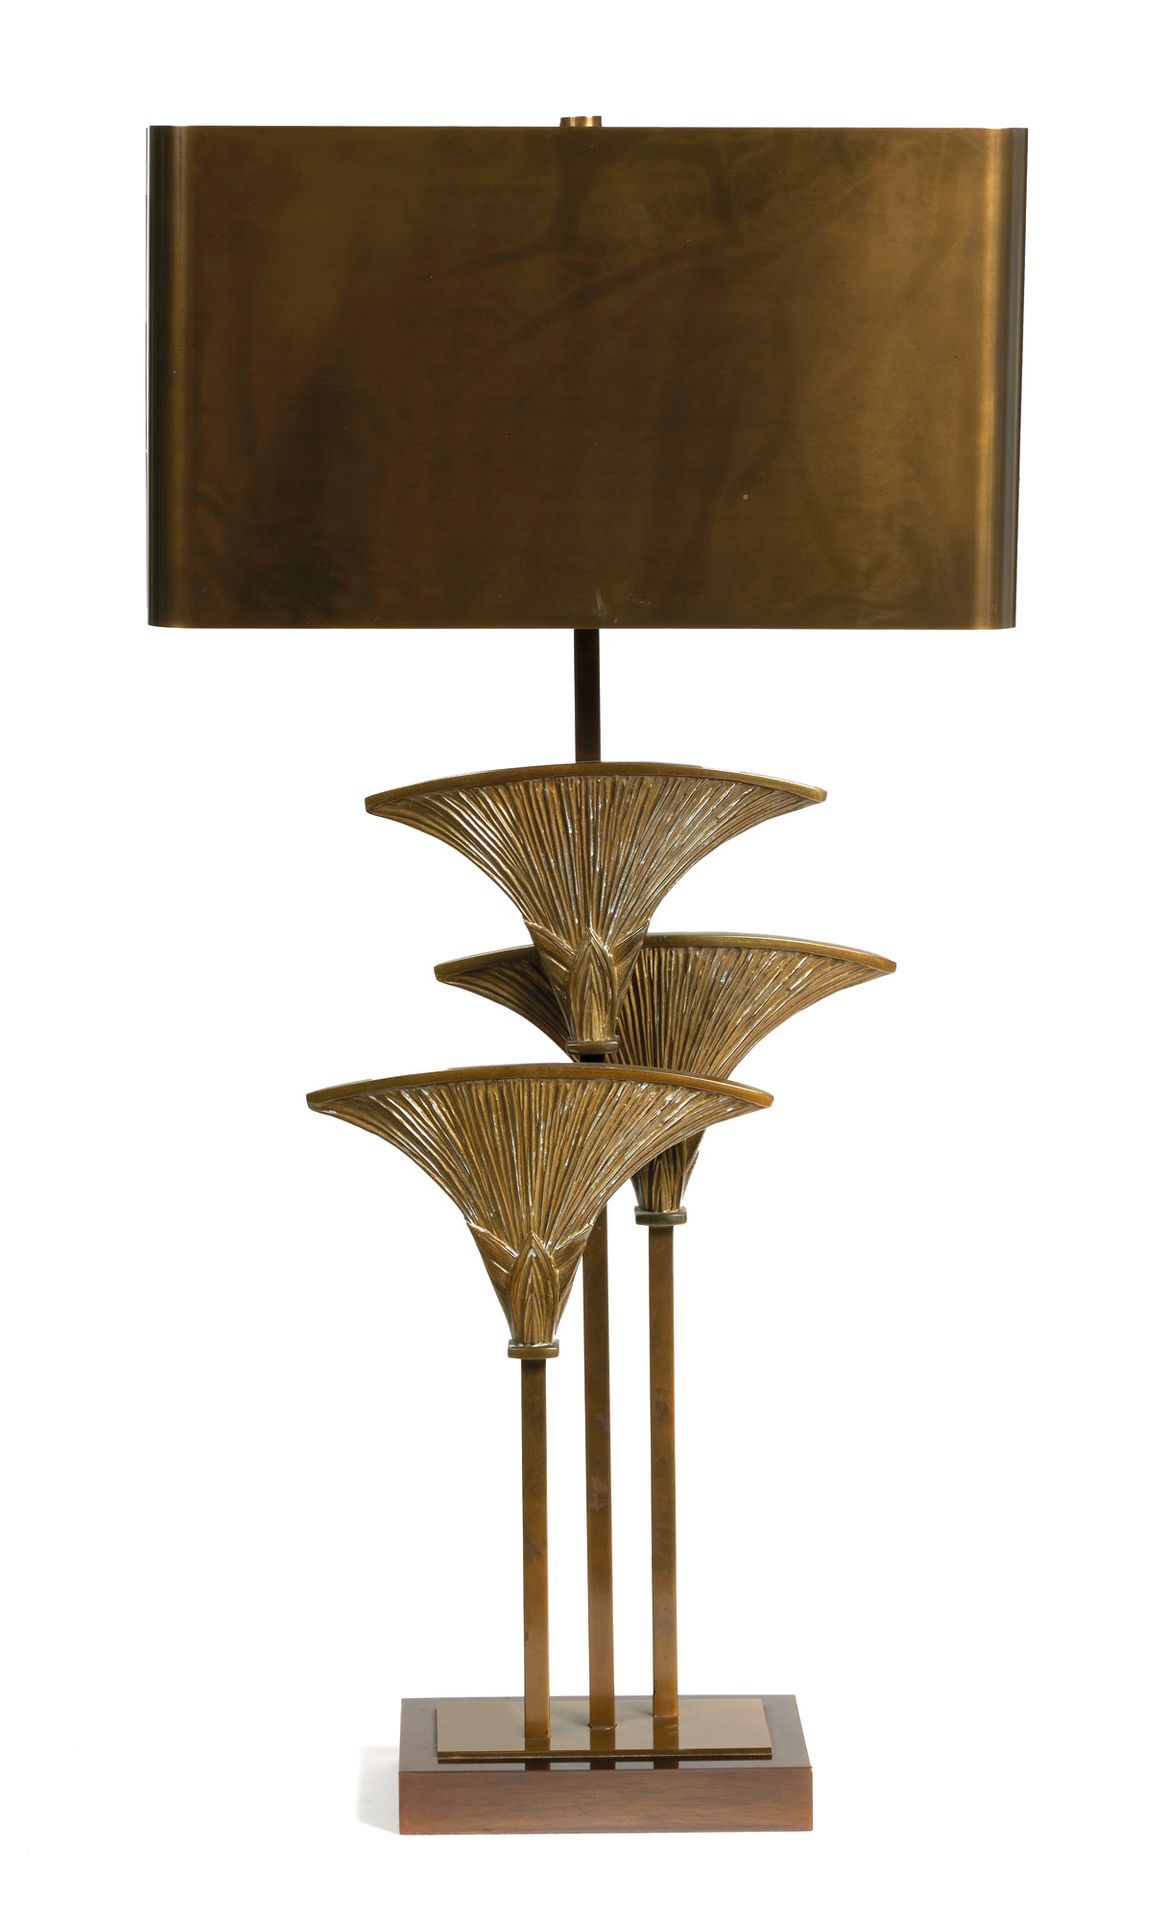 MAISON CHARLES 查尔斯之家

底比斯 "灯，装饰有三片鎏金铜和黄铜的纸莎草叶子，其四角形底座为鎏金金属，有双重铜锈。

高度为77.5厘米。

底&hellip;